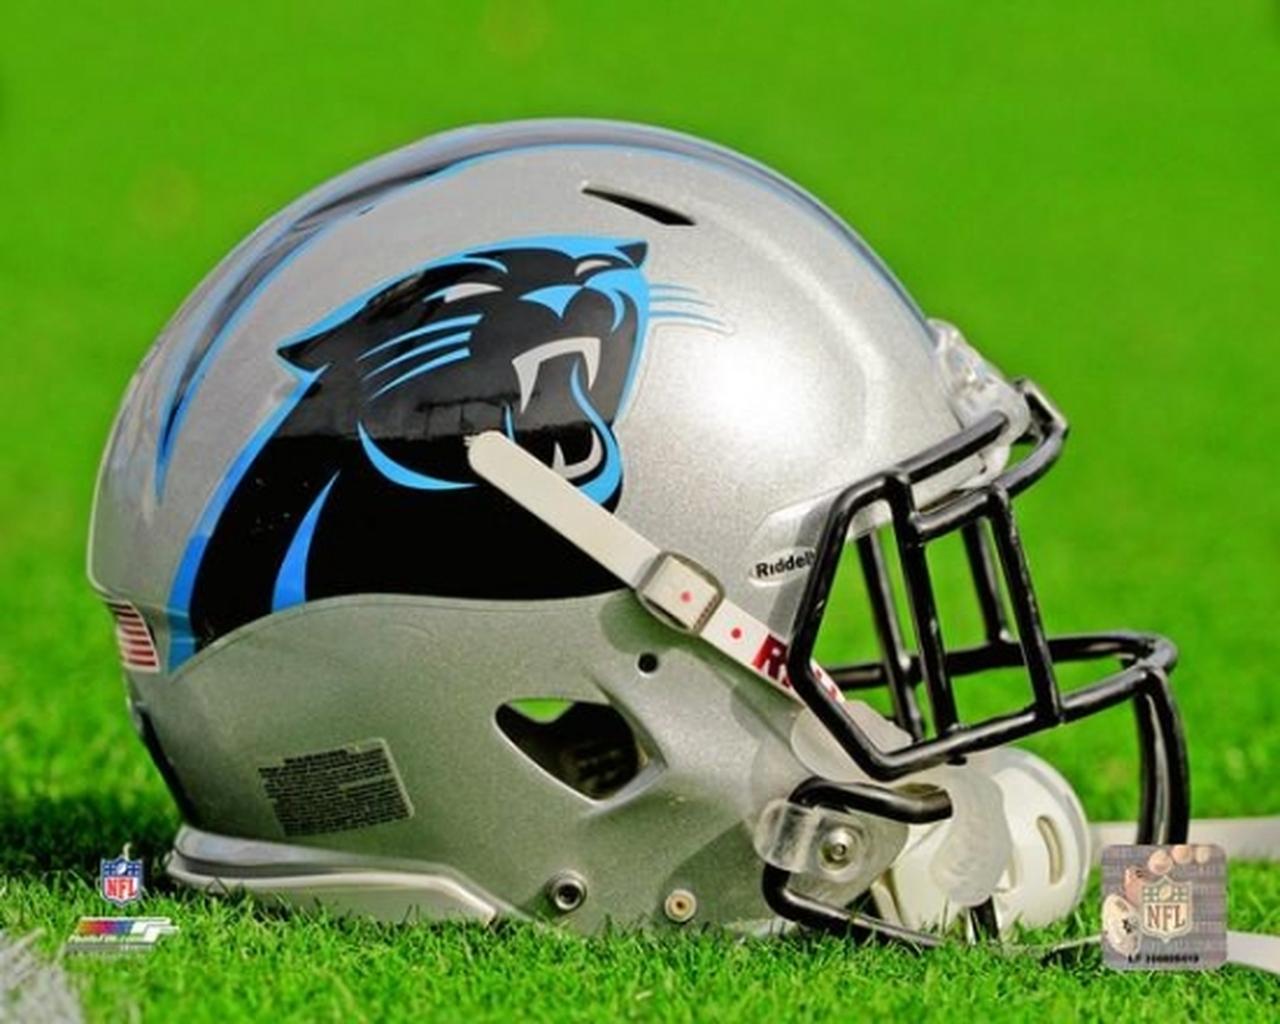 Carolina Panthers Helmet Wallpapers Top Free Carolina Panthers Helmet